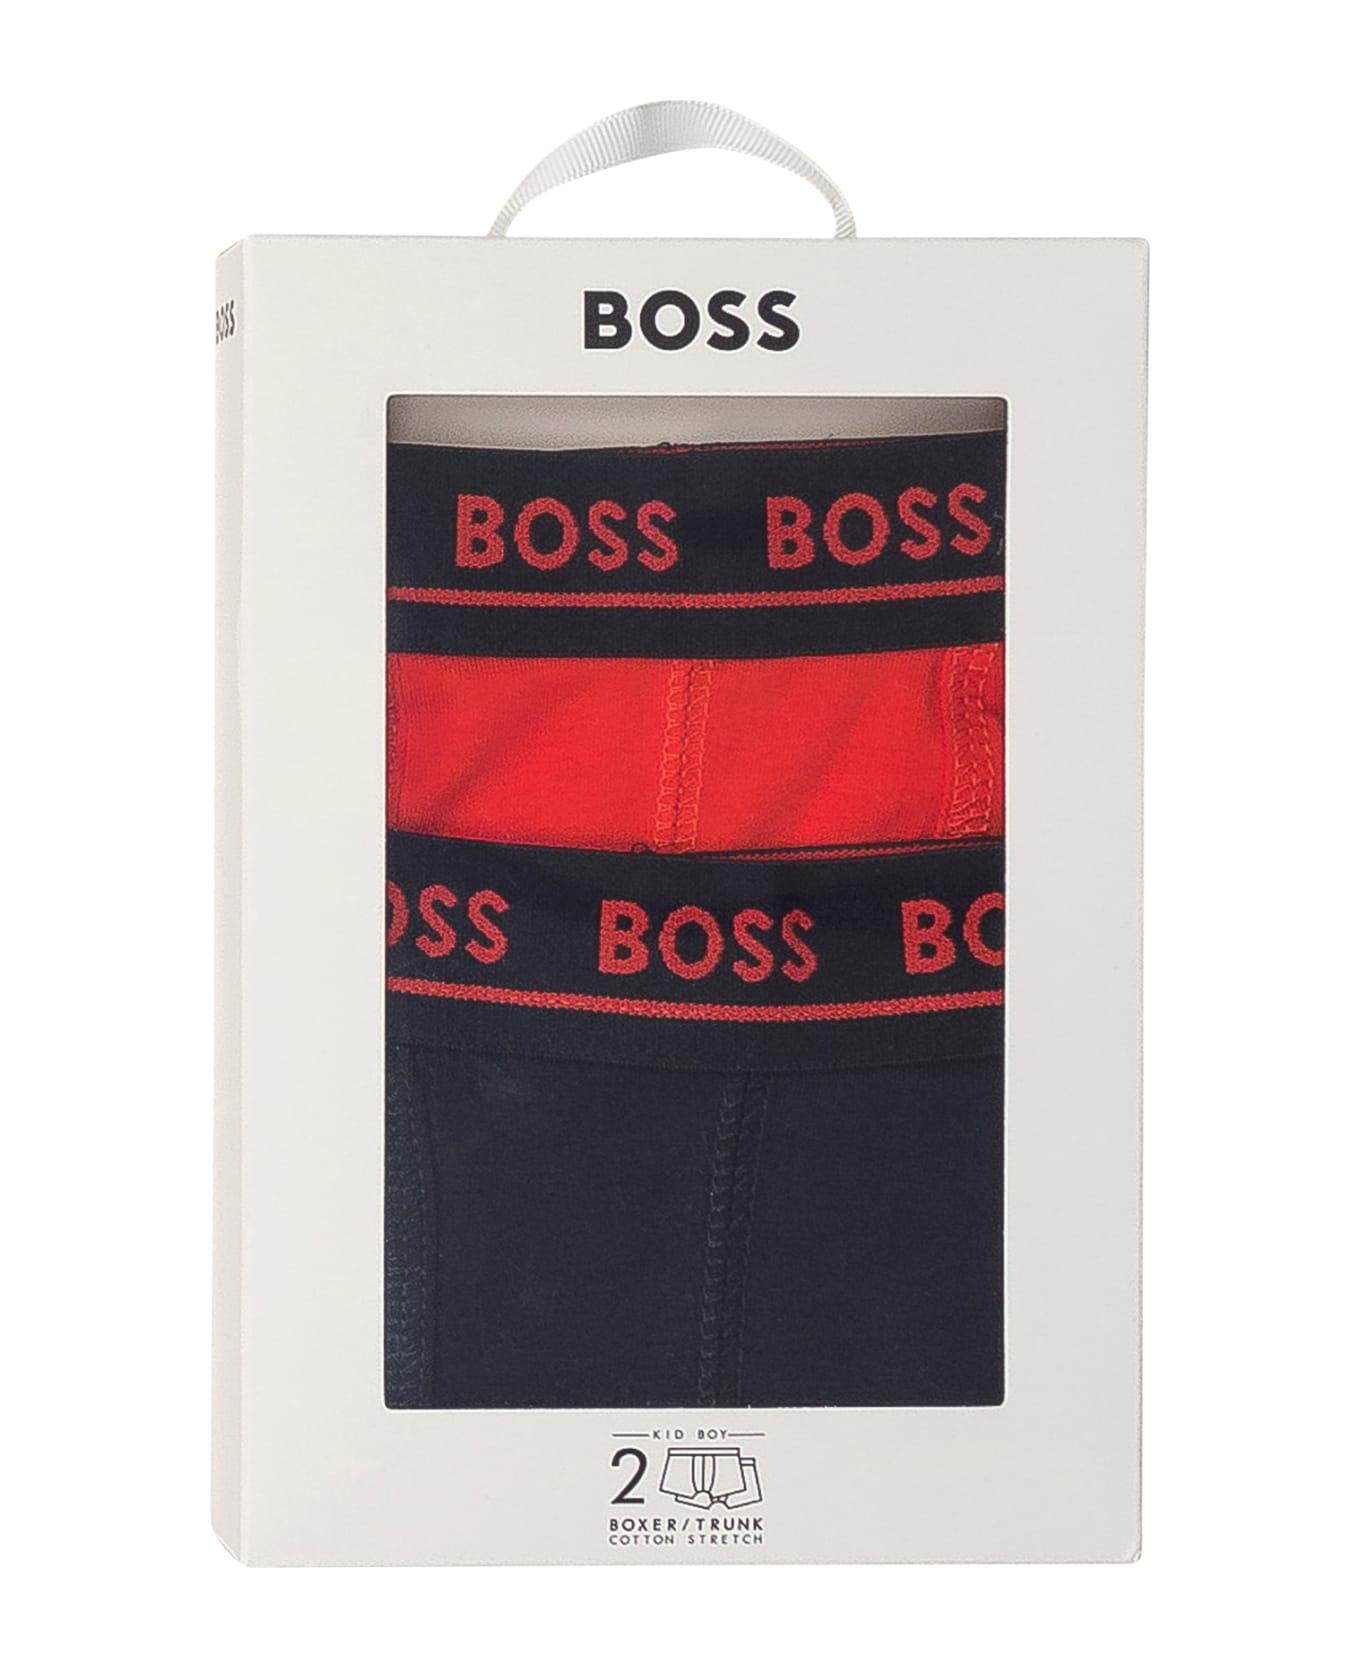 Hugo Boss Set 2 Boxer Shorts - 992 アンダーウェア